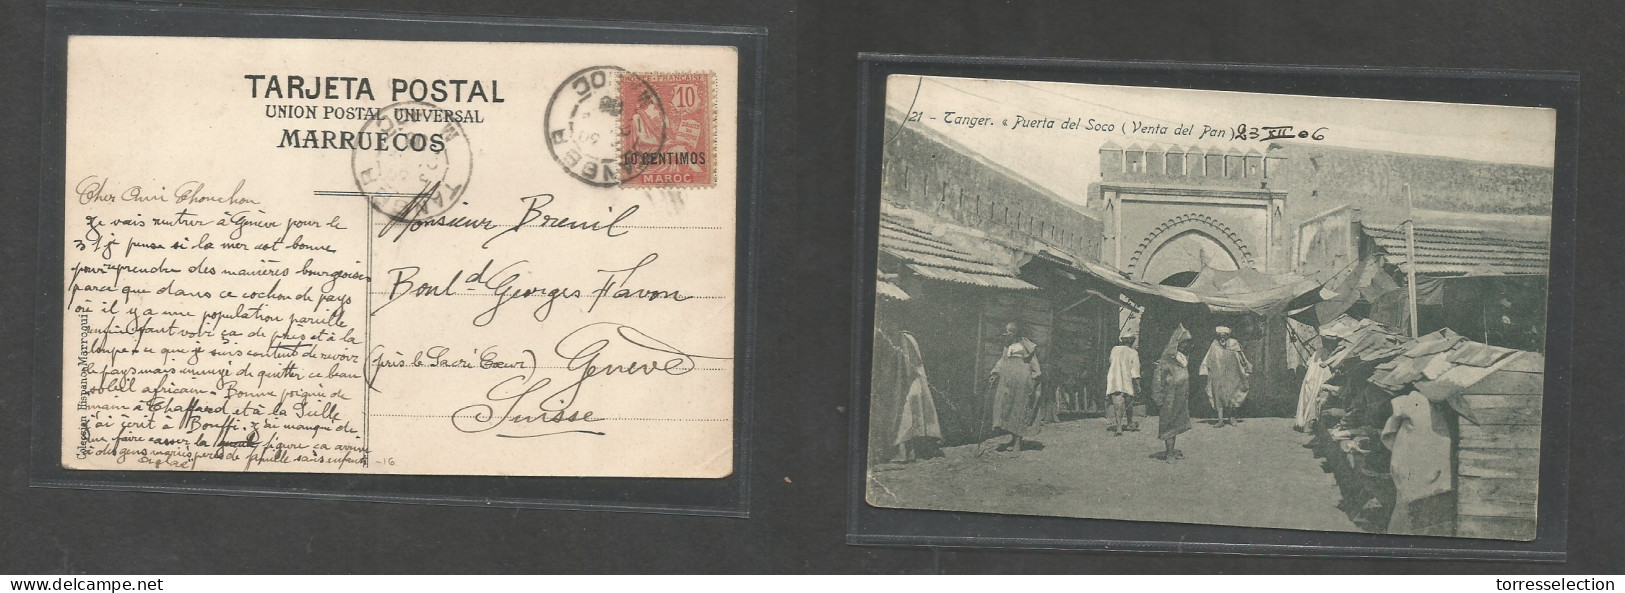 MARRUECOS - French. 1906. Tanger - Switzerland, Geneva. Fkd Ppc. Spanish Currency 10c Ovptd Red, Tied Cds. Fine. - Maroc (1956-...)